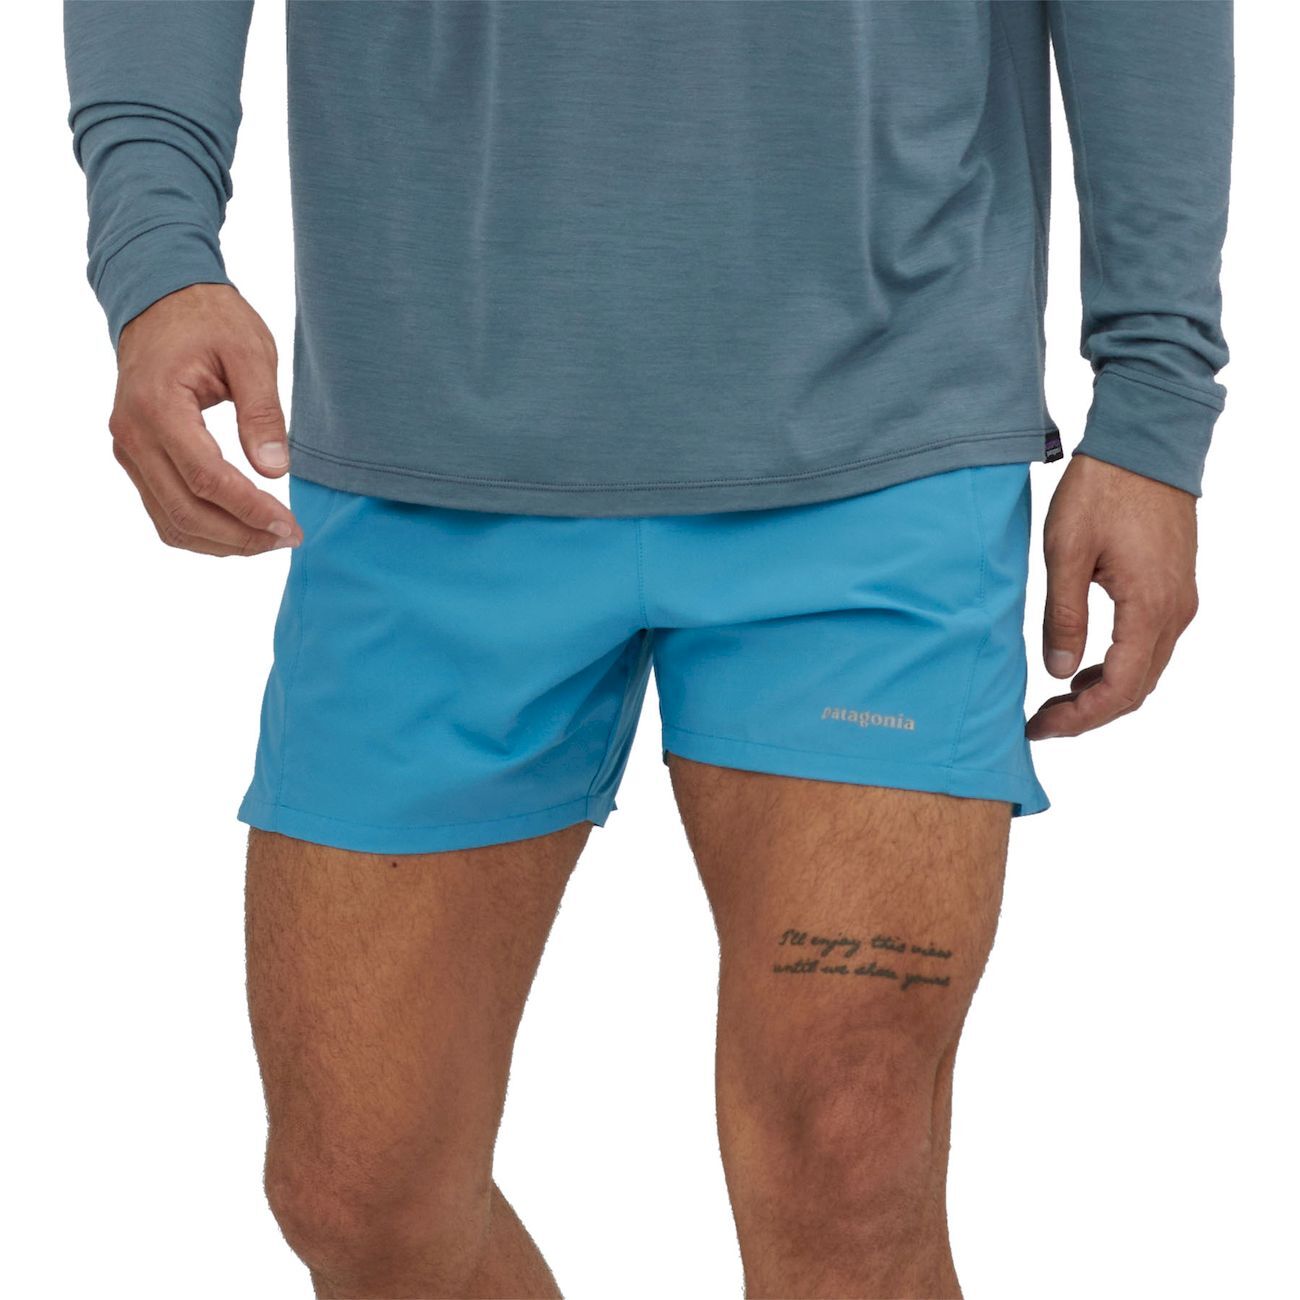 Patagonia - Strider Pro Shorts - 5" - Hombre